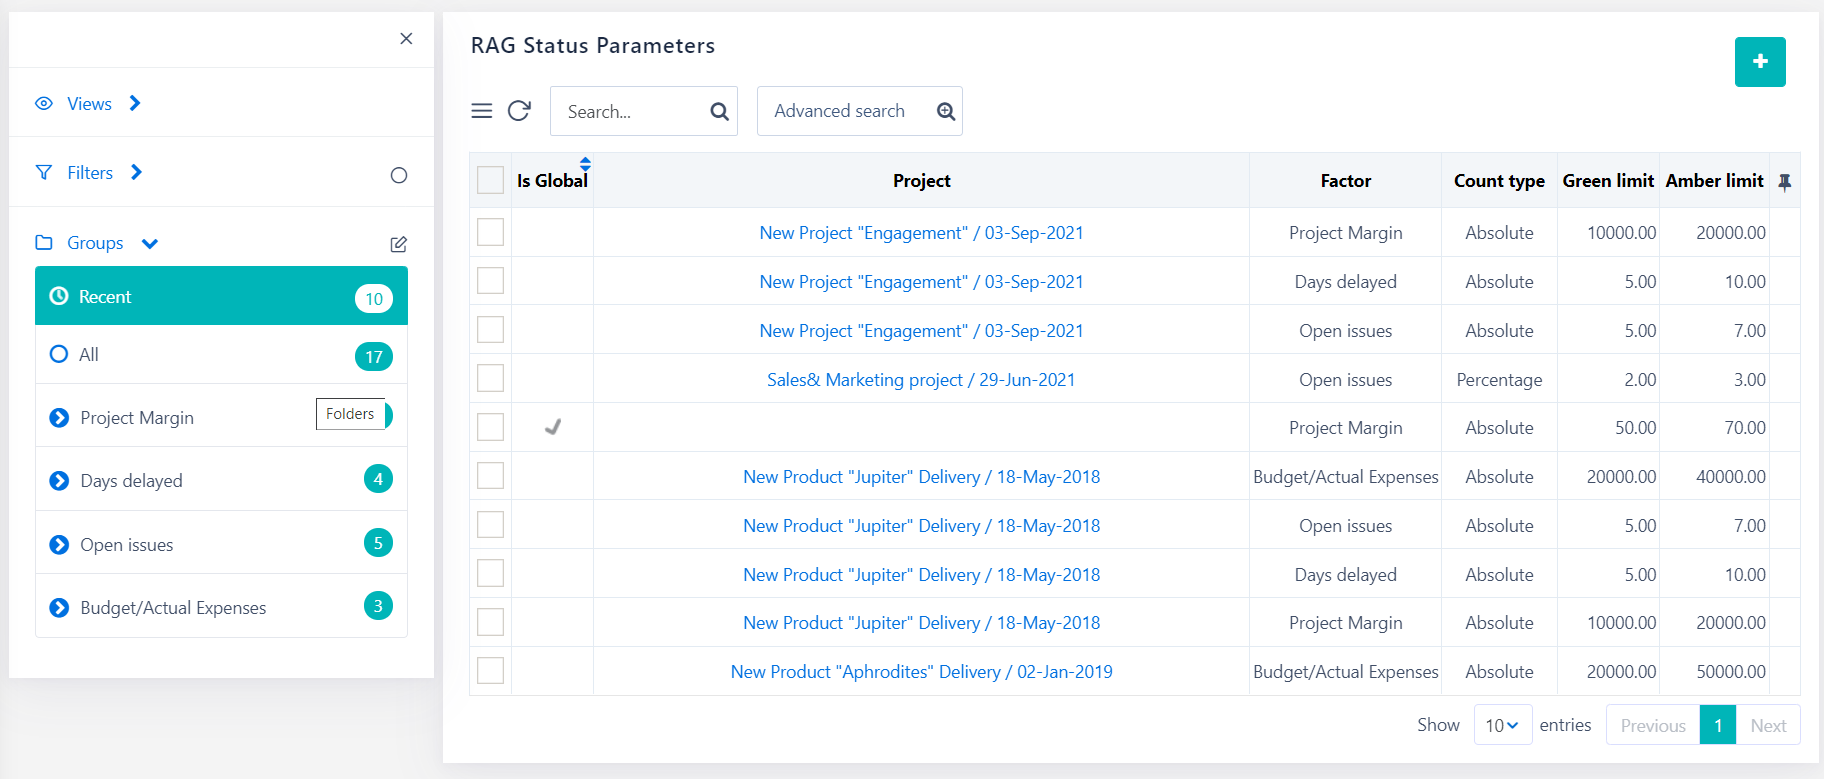 rag status parameters list v.6.0 | Comidor Platform